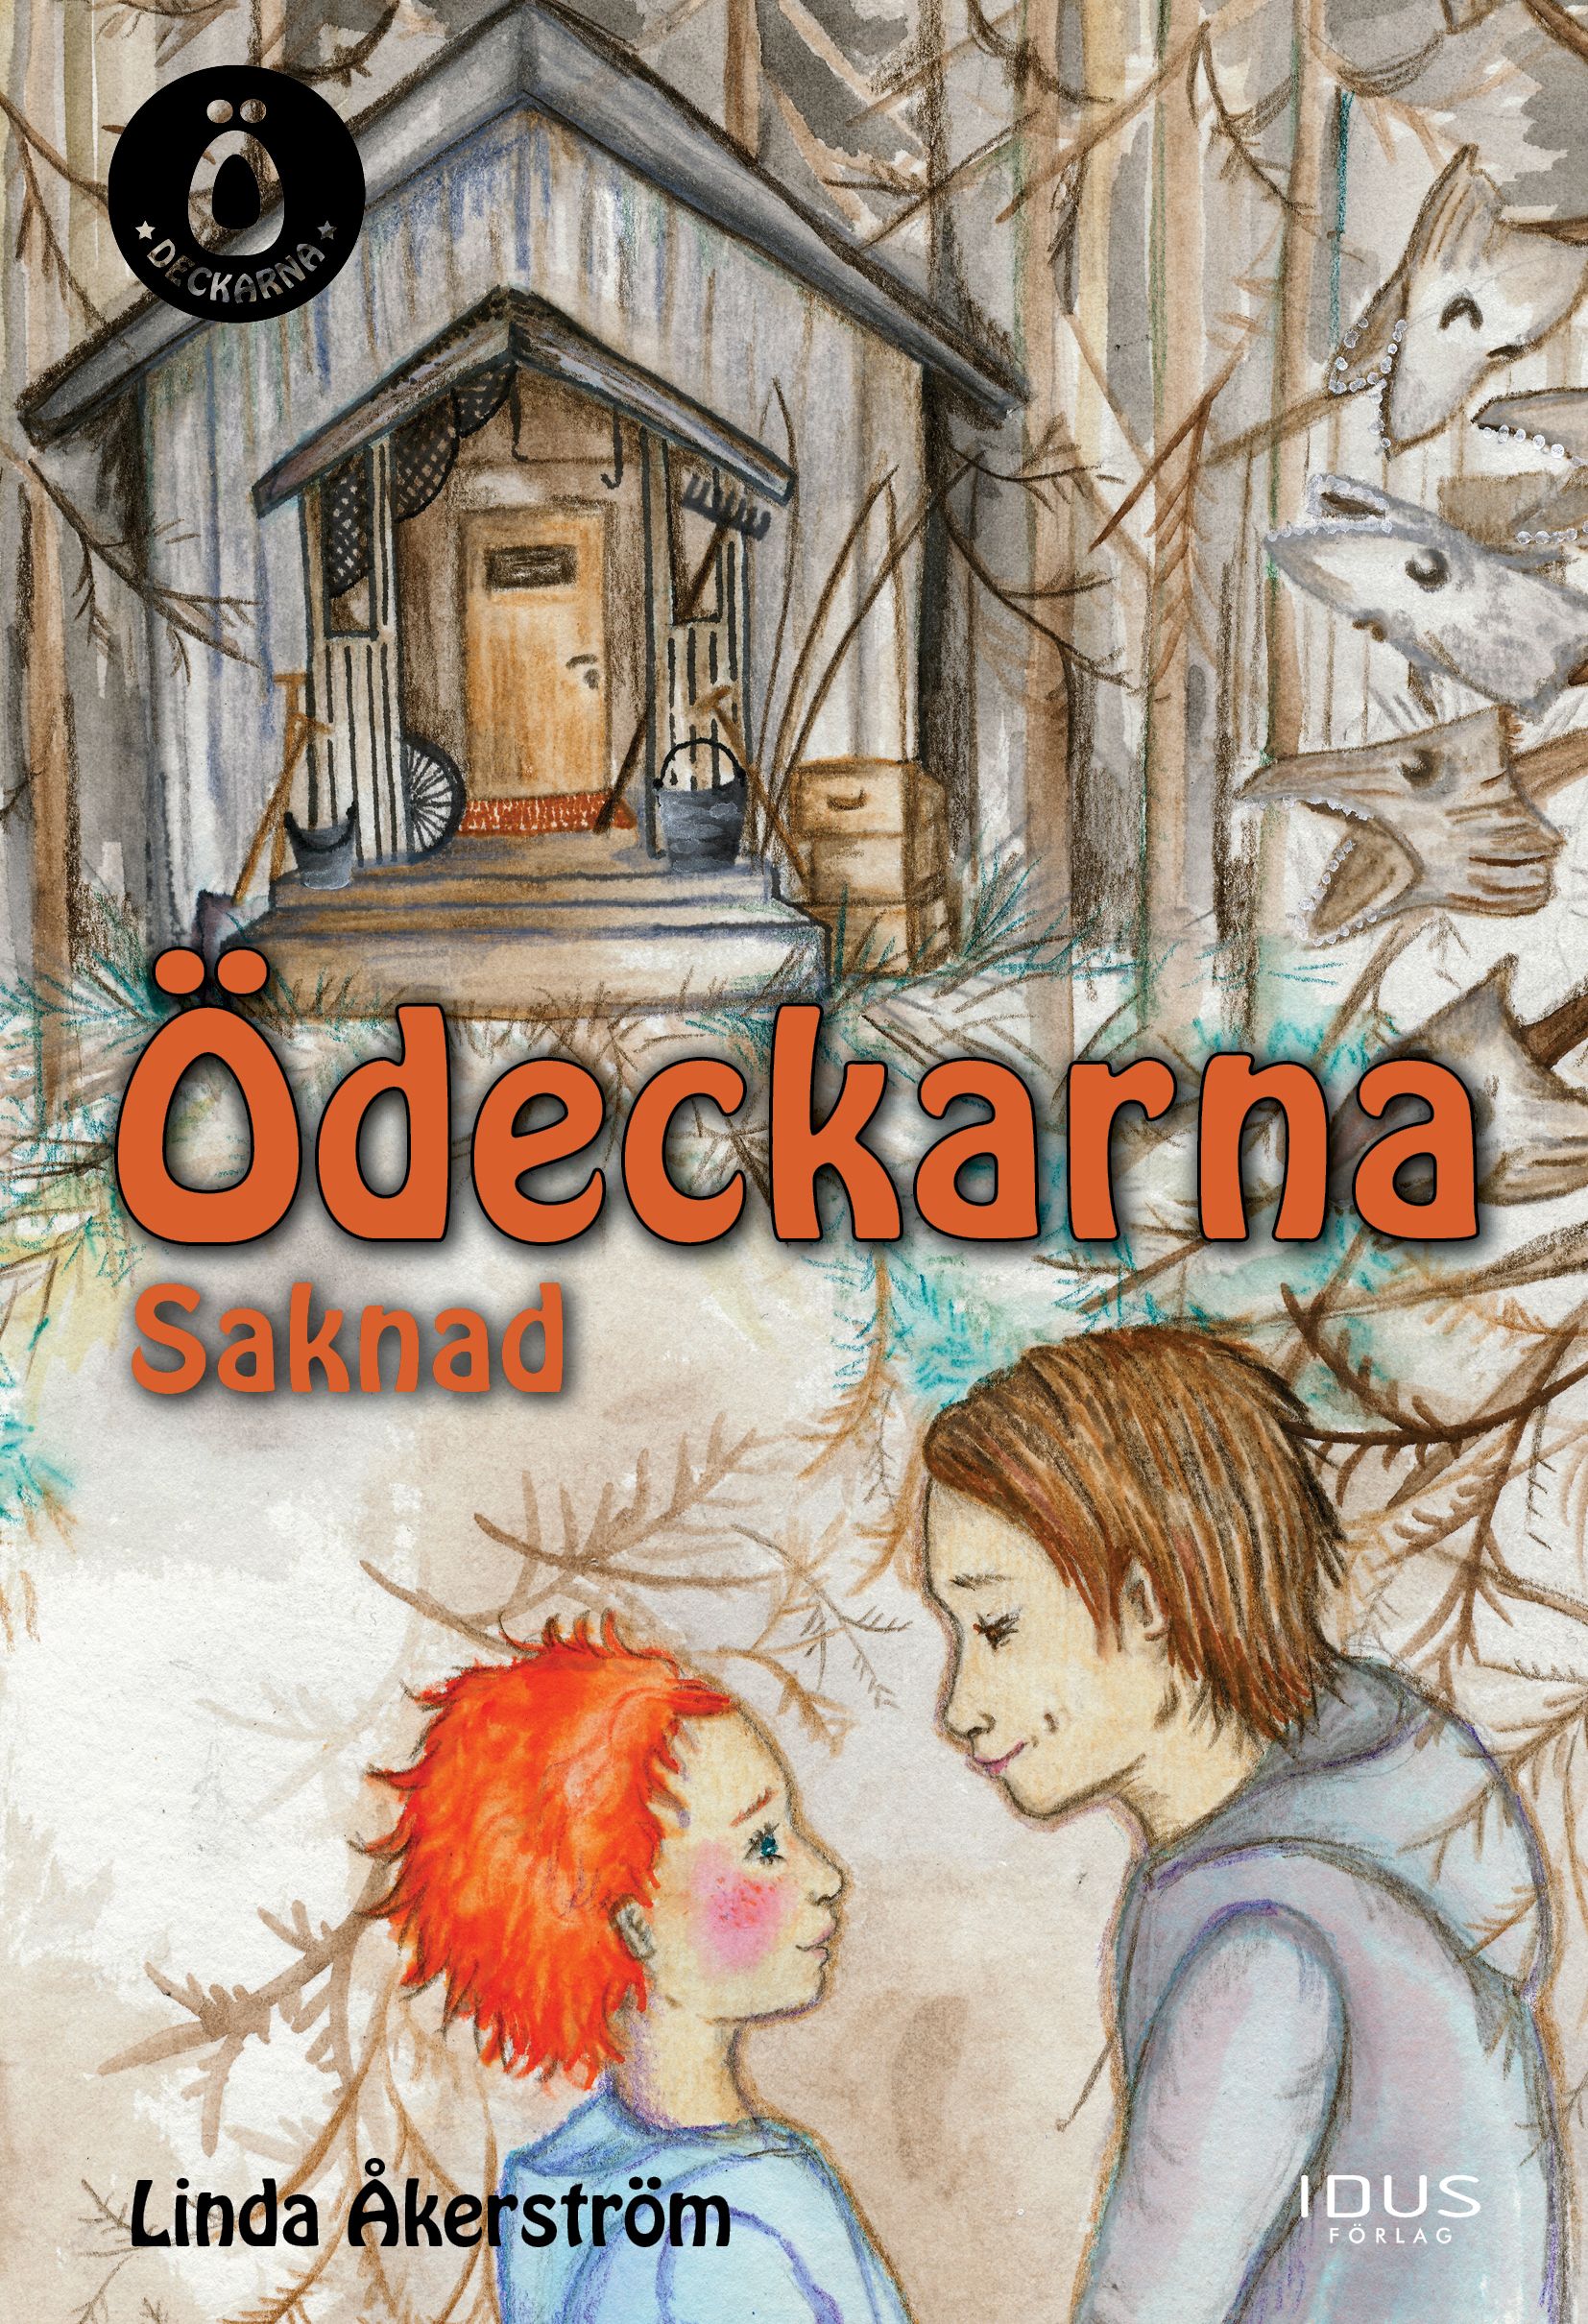 Ö-deckarna - Saknad, e-bog af Linda Åkerström